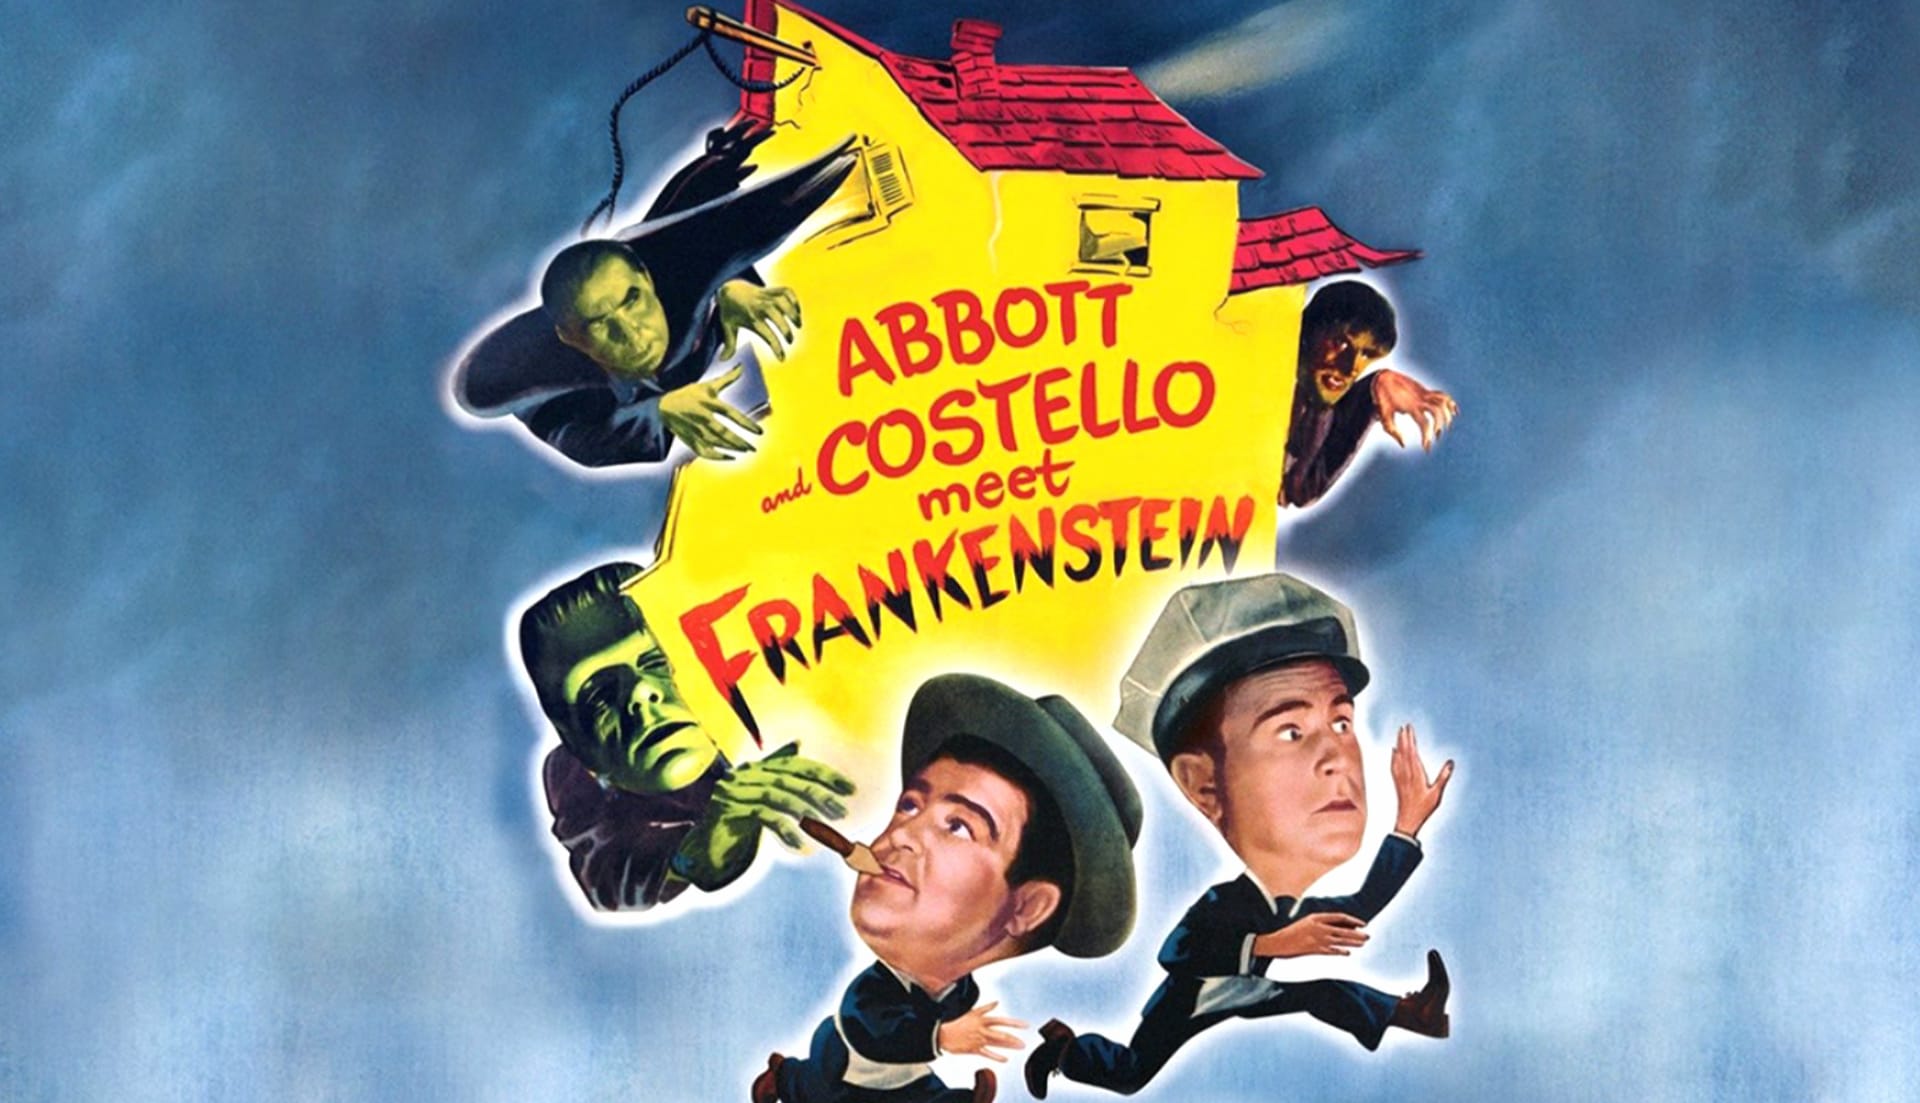 Abbott and Costello Meet Frankenstein wallpapers HD quality